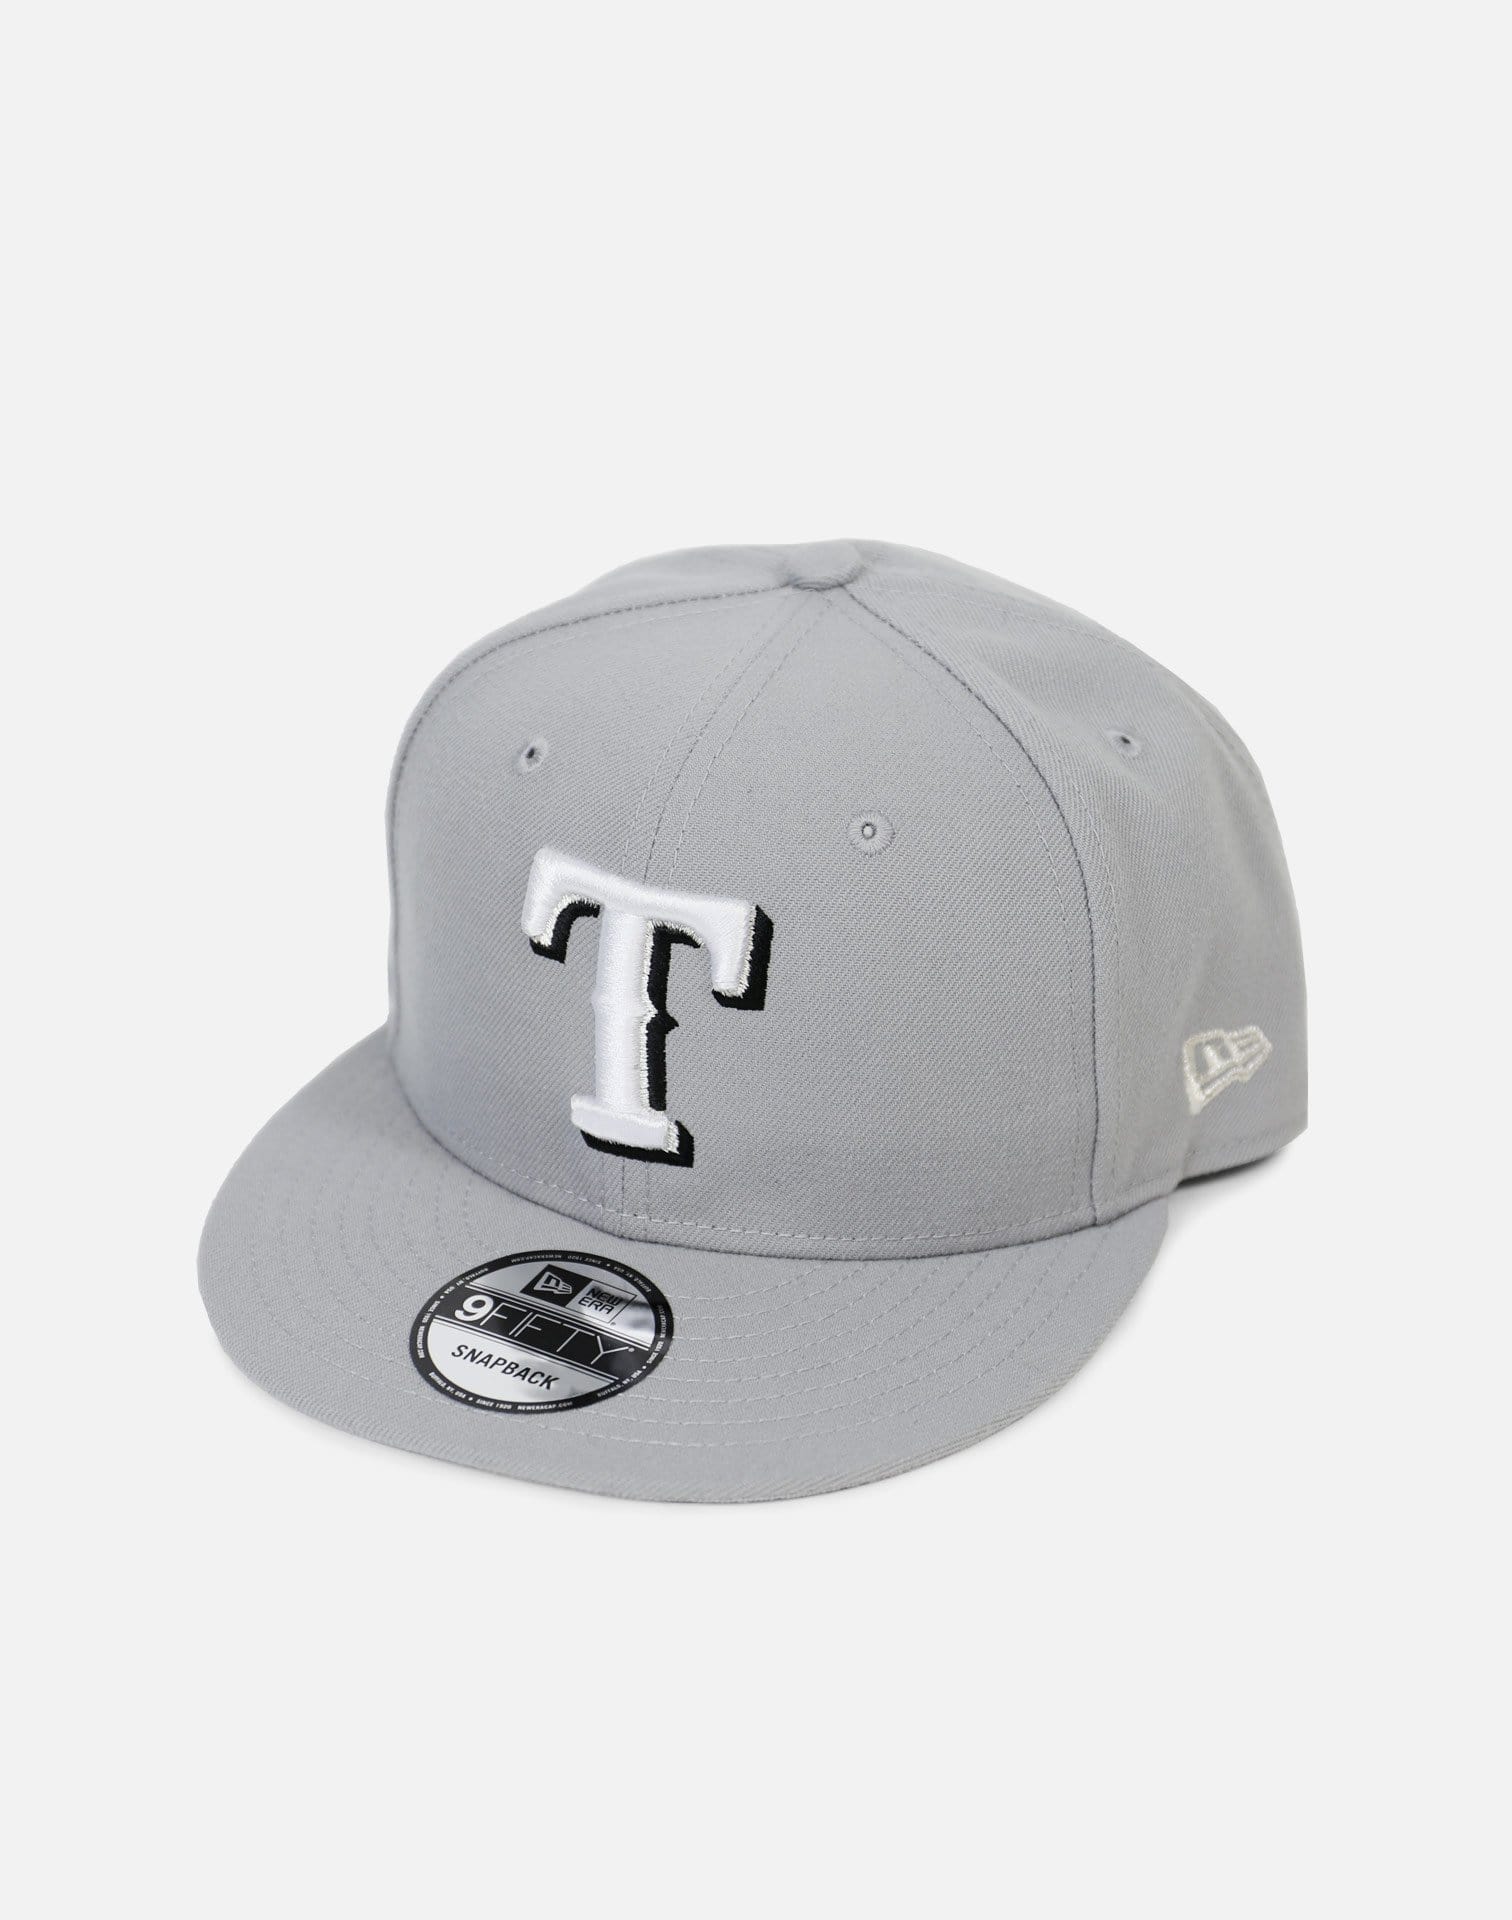 Lids Texas Rangers Pro Standard Washed Neon Snapback Hat - Gray